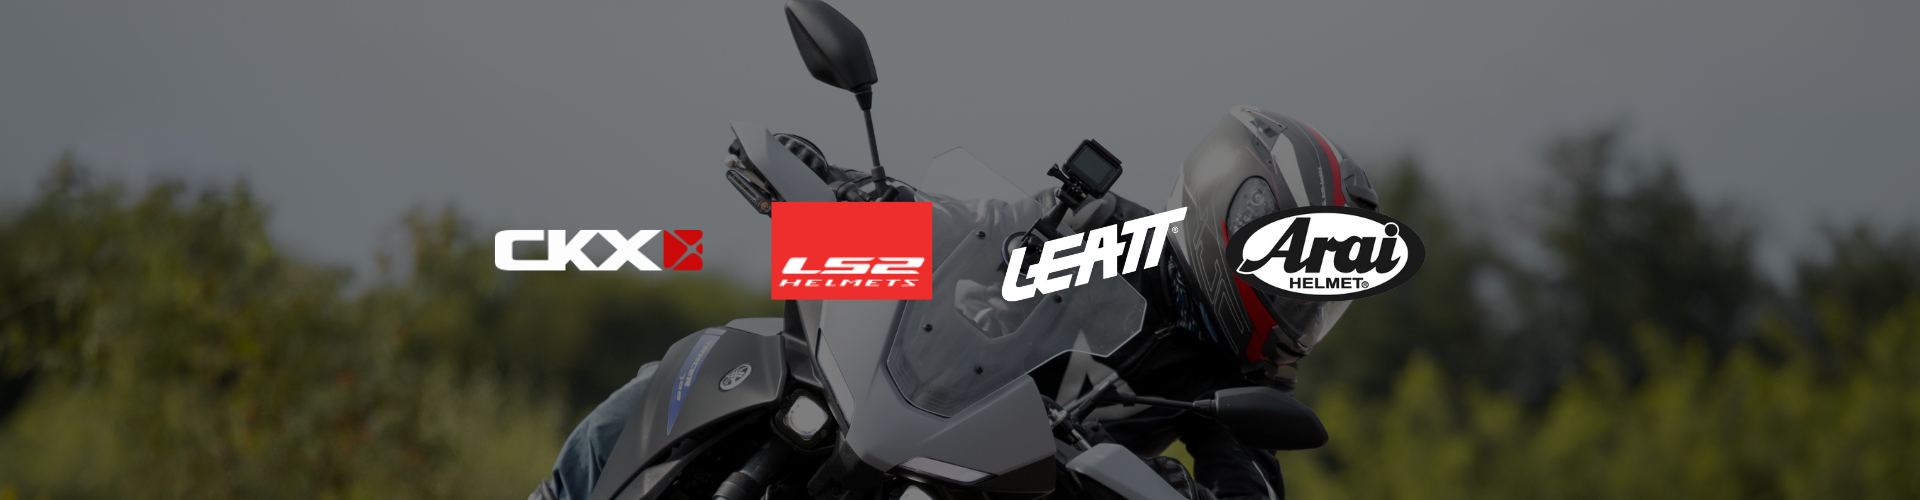 List of Helmet brands CKX, LS2, LEATT, ARAI with overlay background of motorcycle rider drifting turn